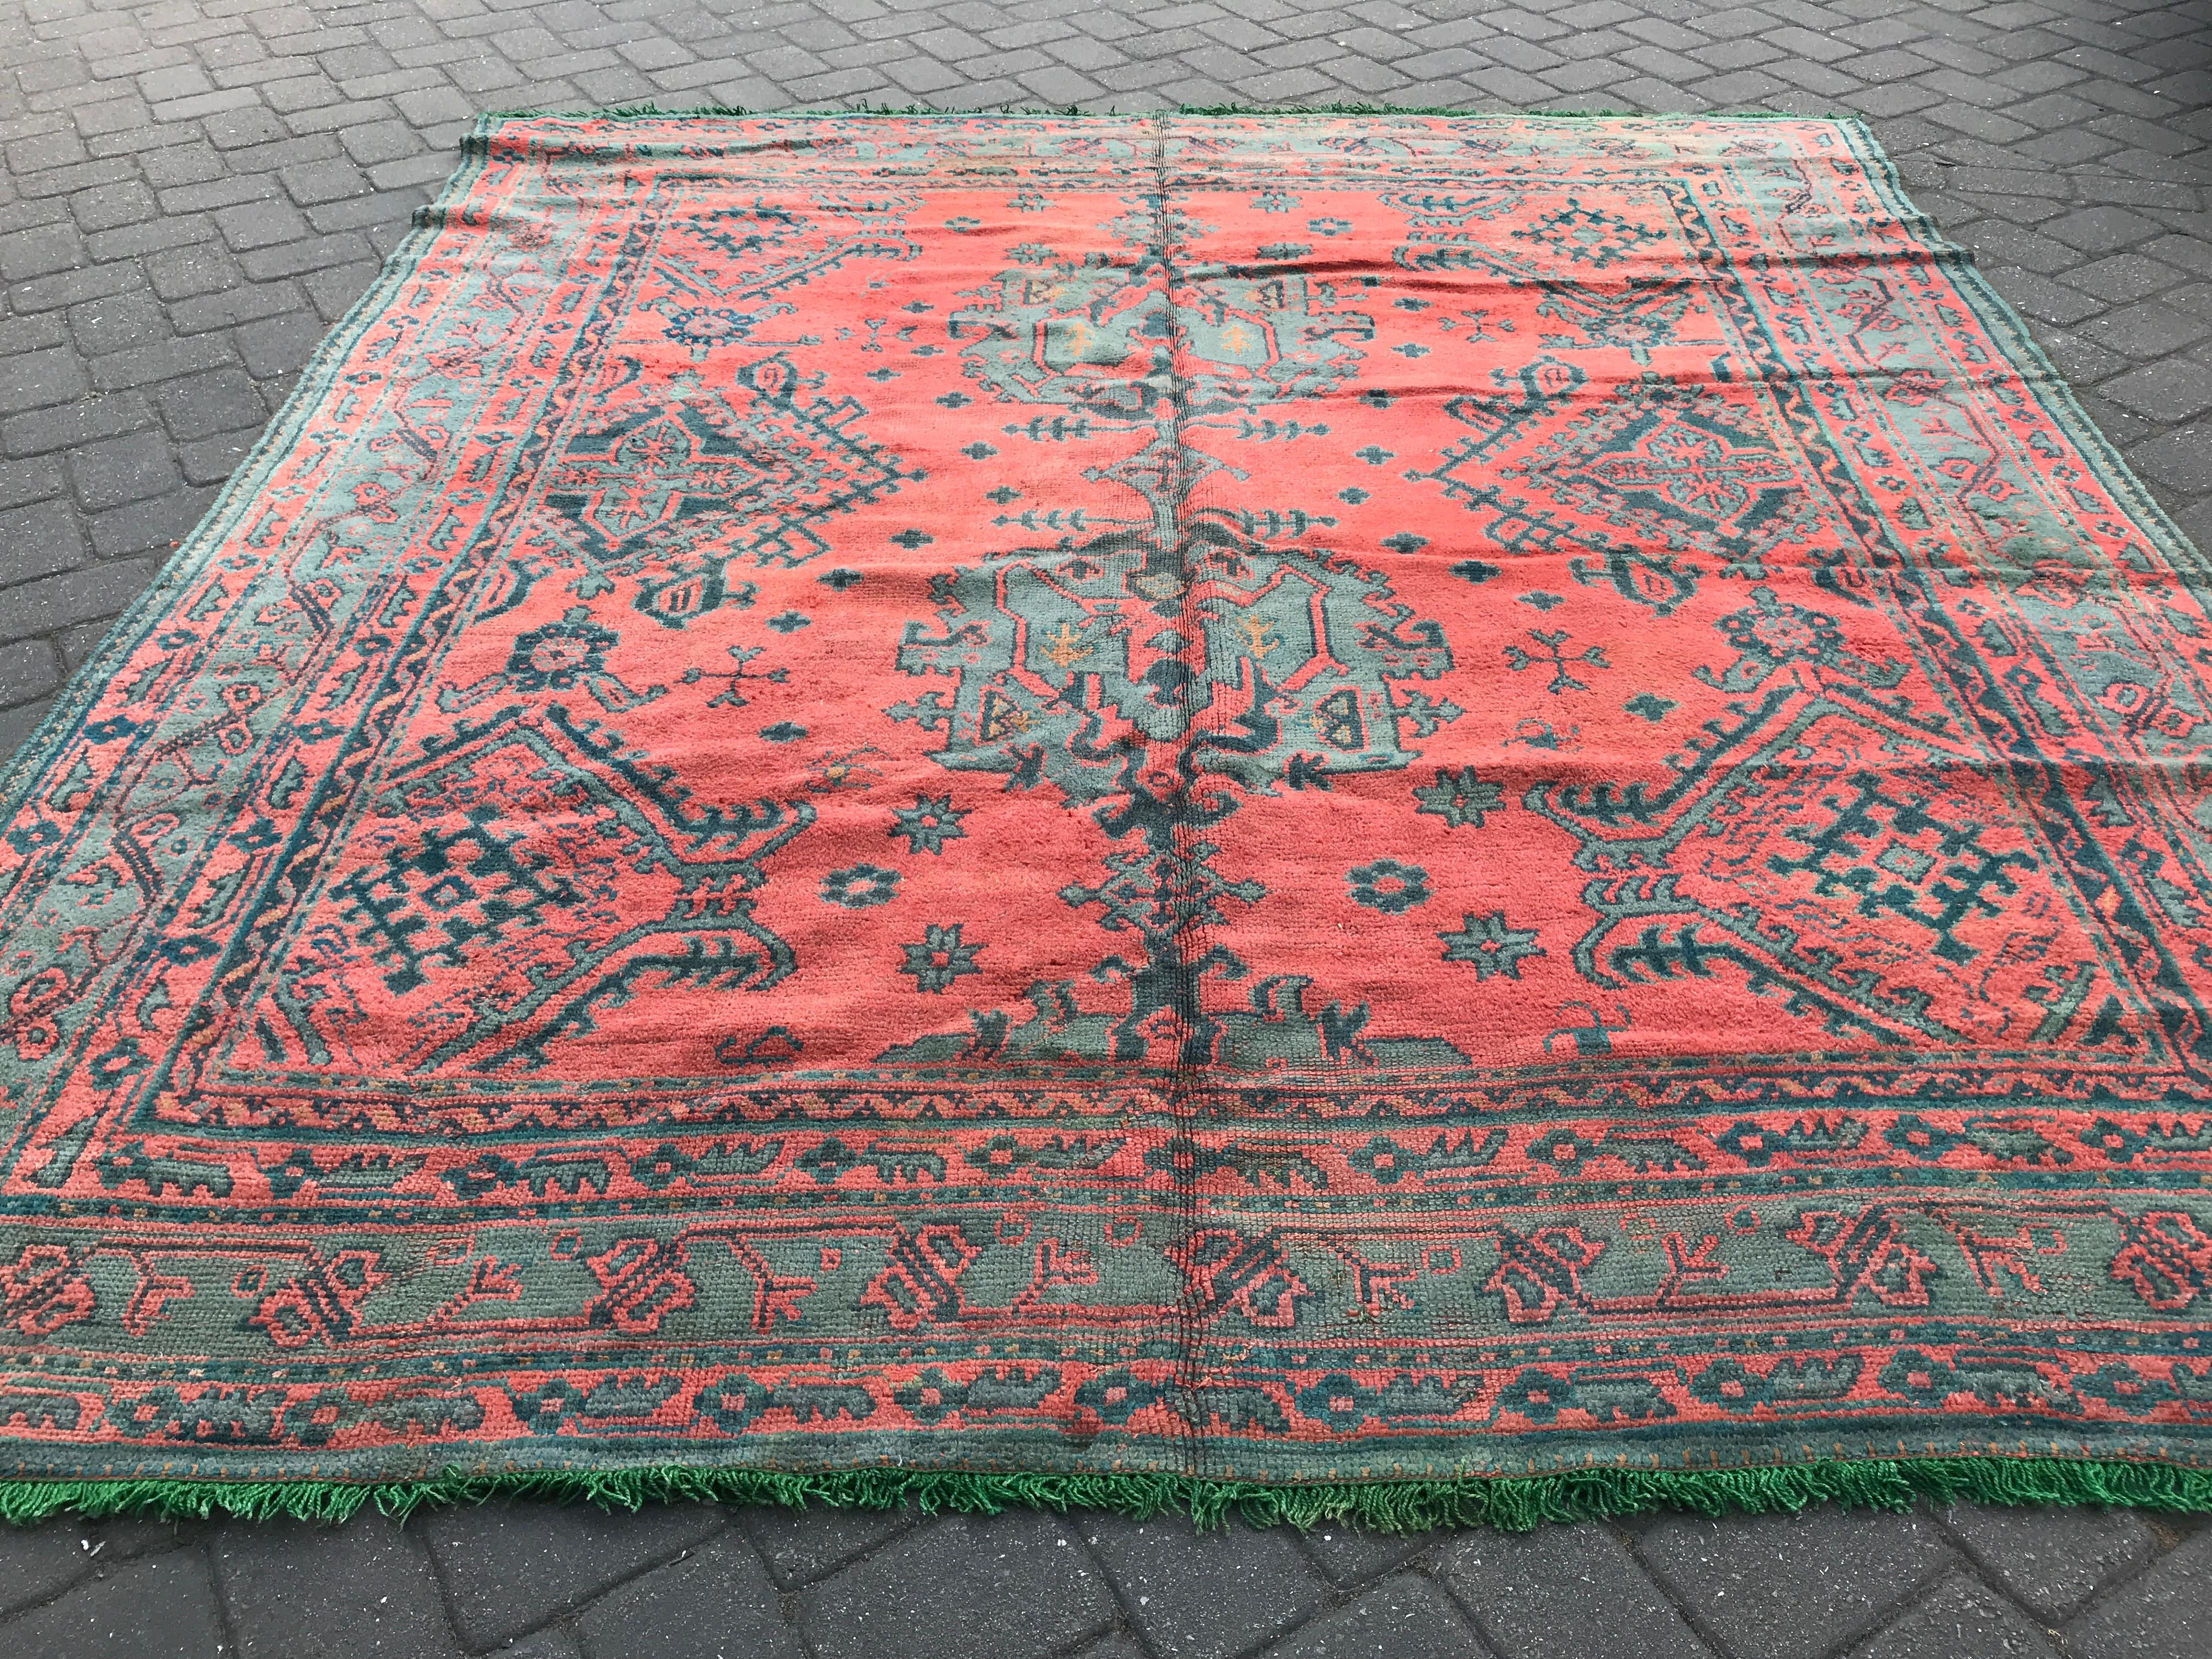 Antique Oushak rug

Measurement: 8'9